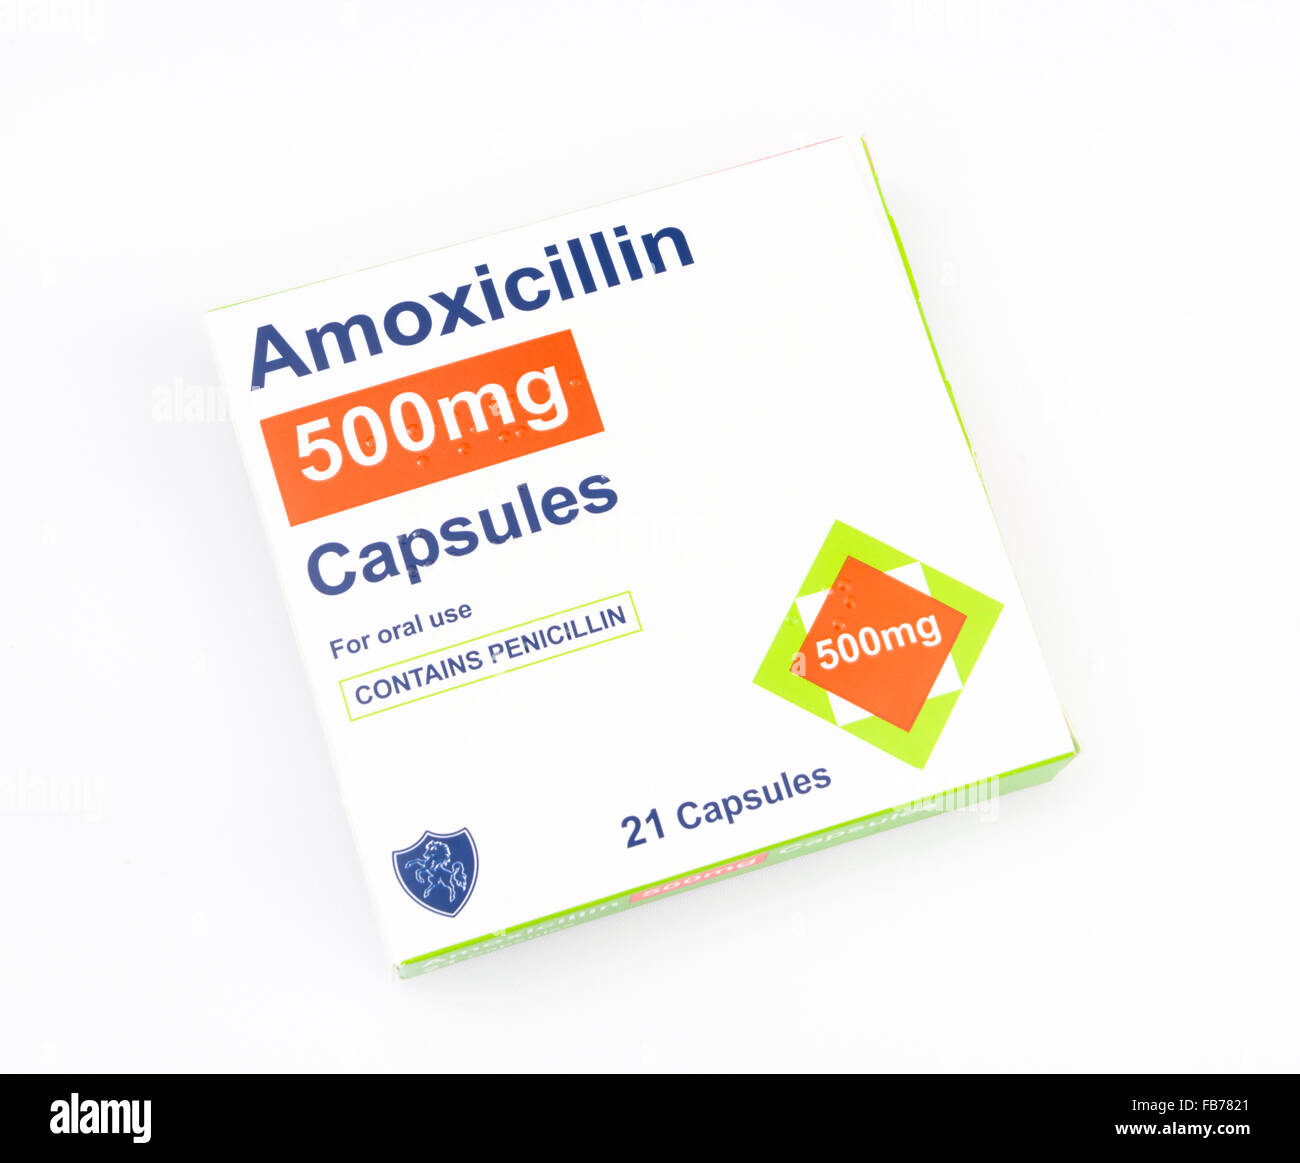 Amoxicillin antibiotics box Stock Photo - Alamy